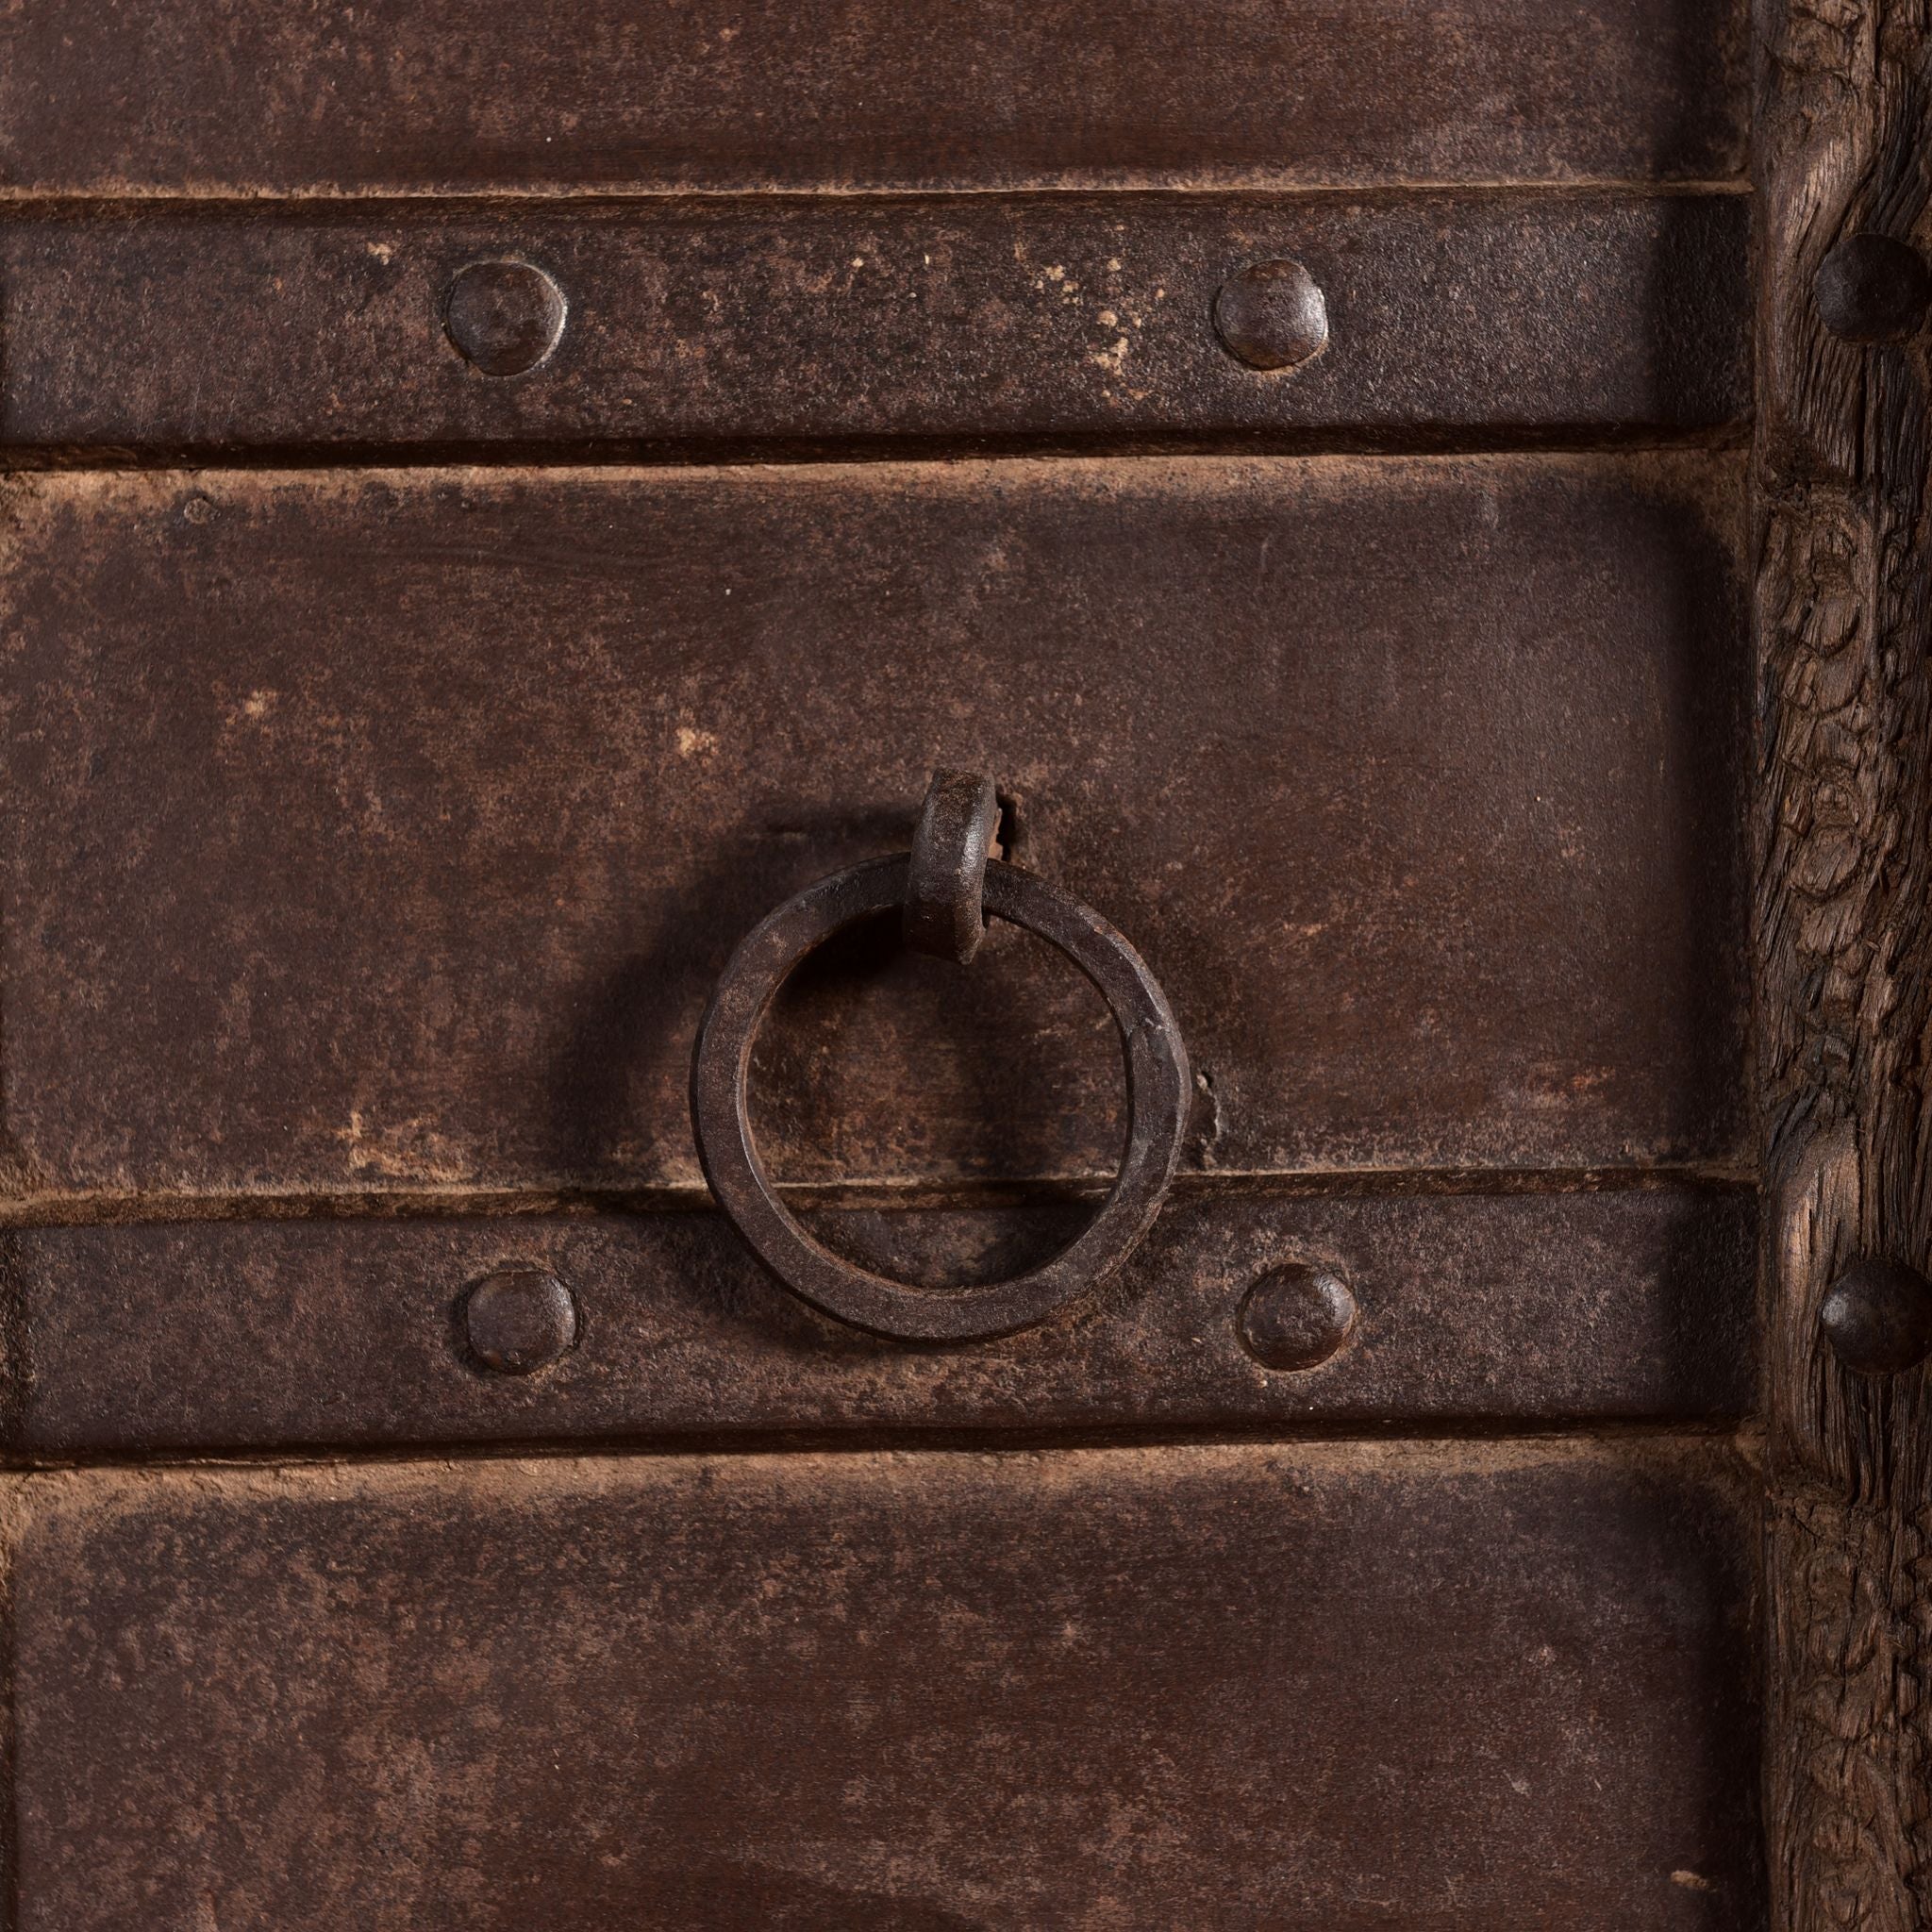 Slim Single Door Shek Cabinet close up view of ring pull handle